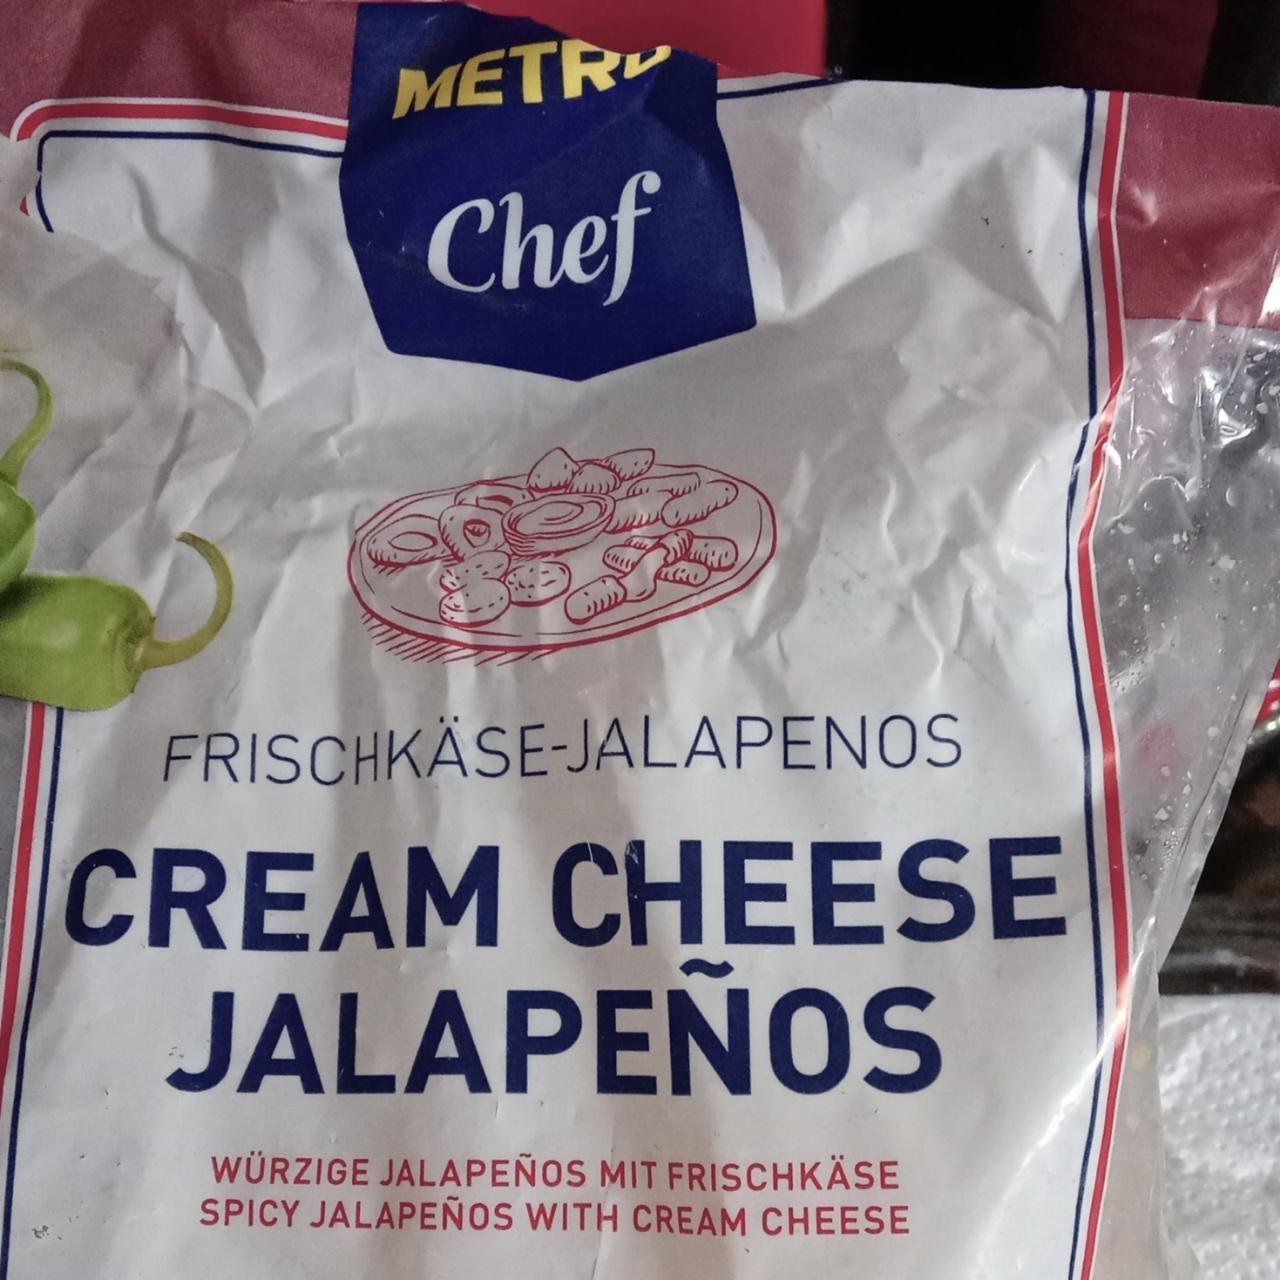 Fotografie - Cream cheese jalapenos Metro Chef